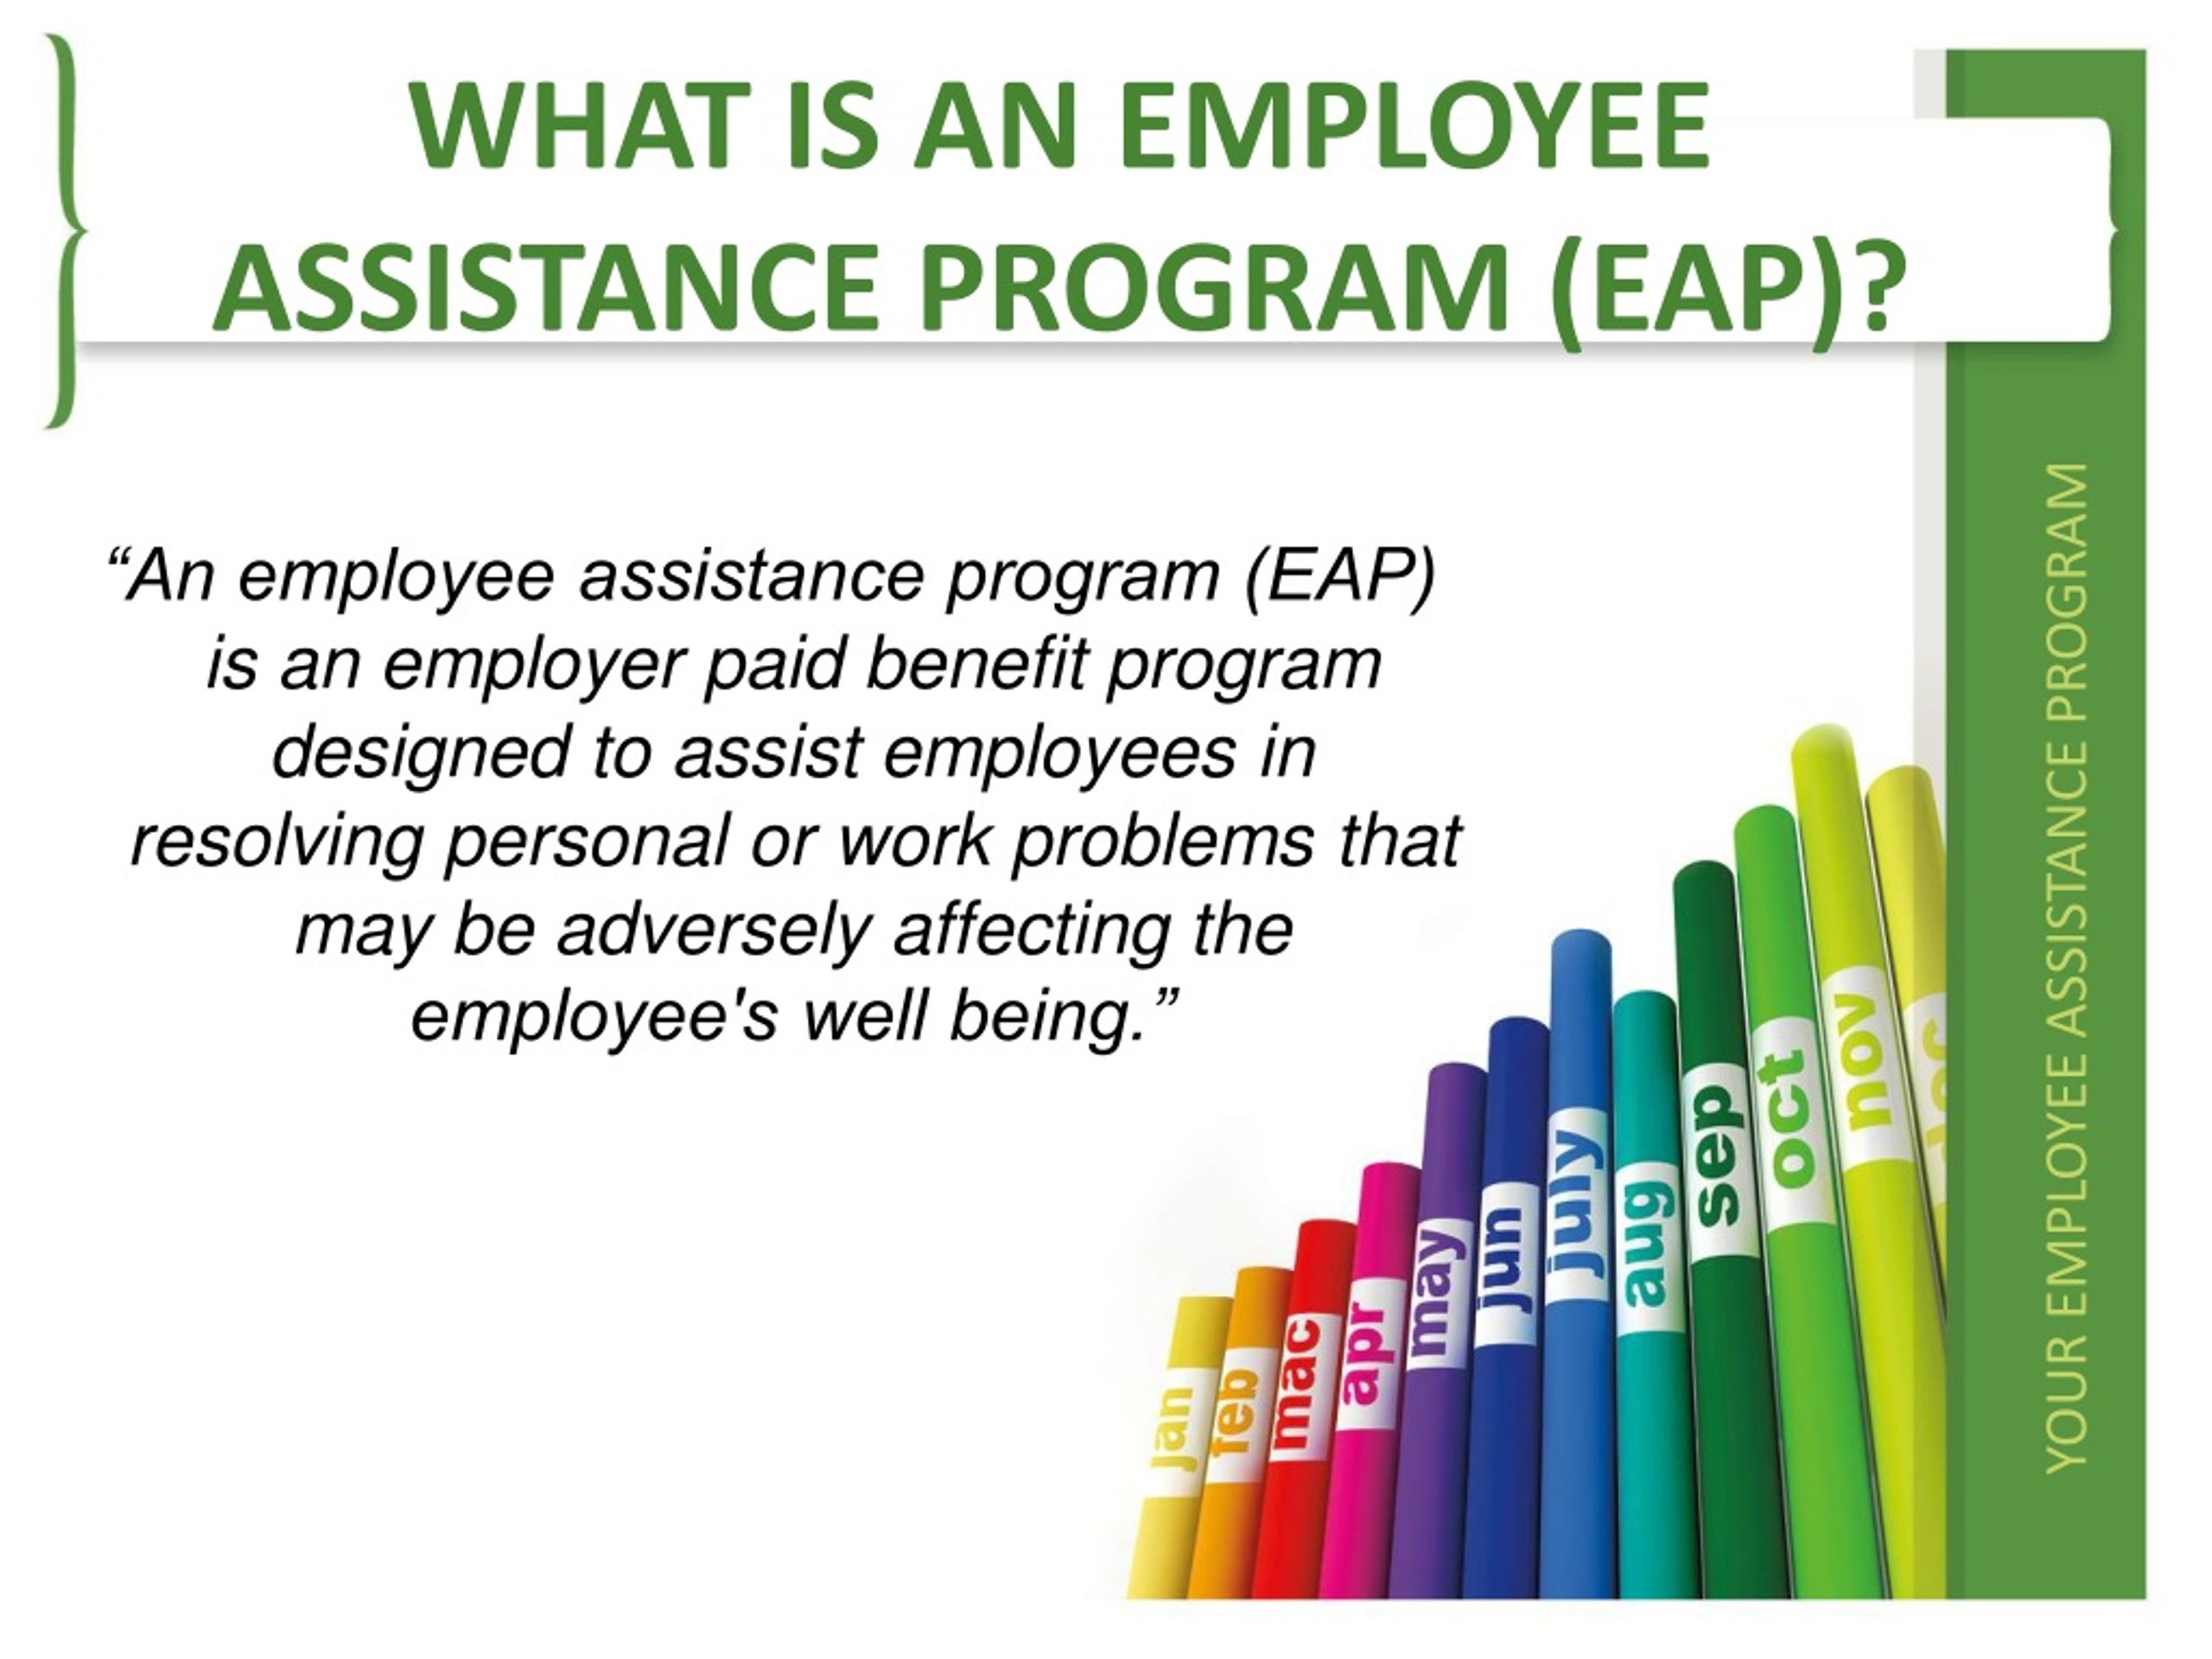 employee assistance program powerpoint presentation